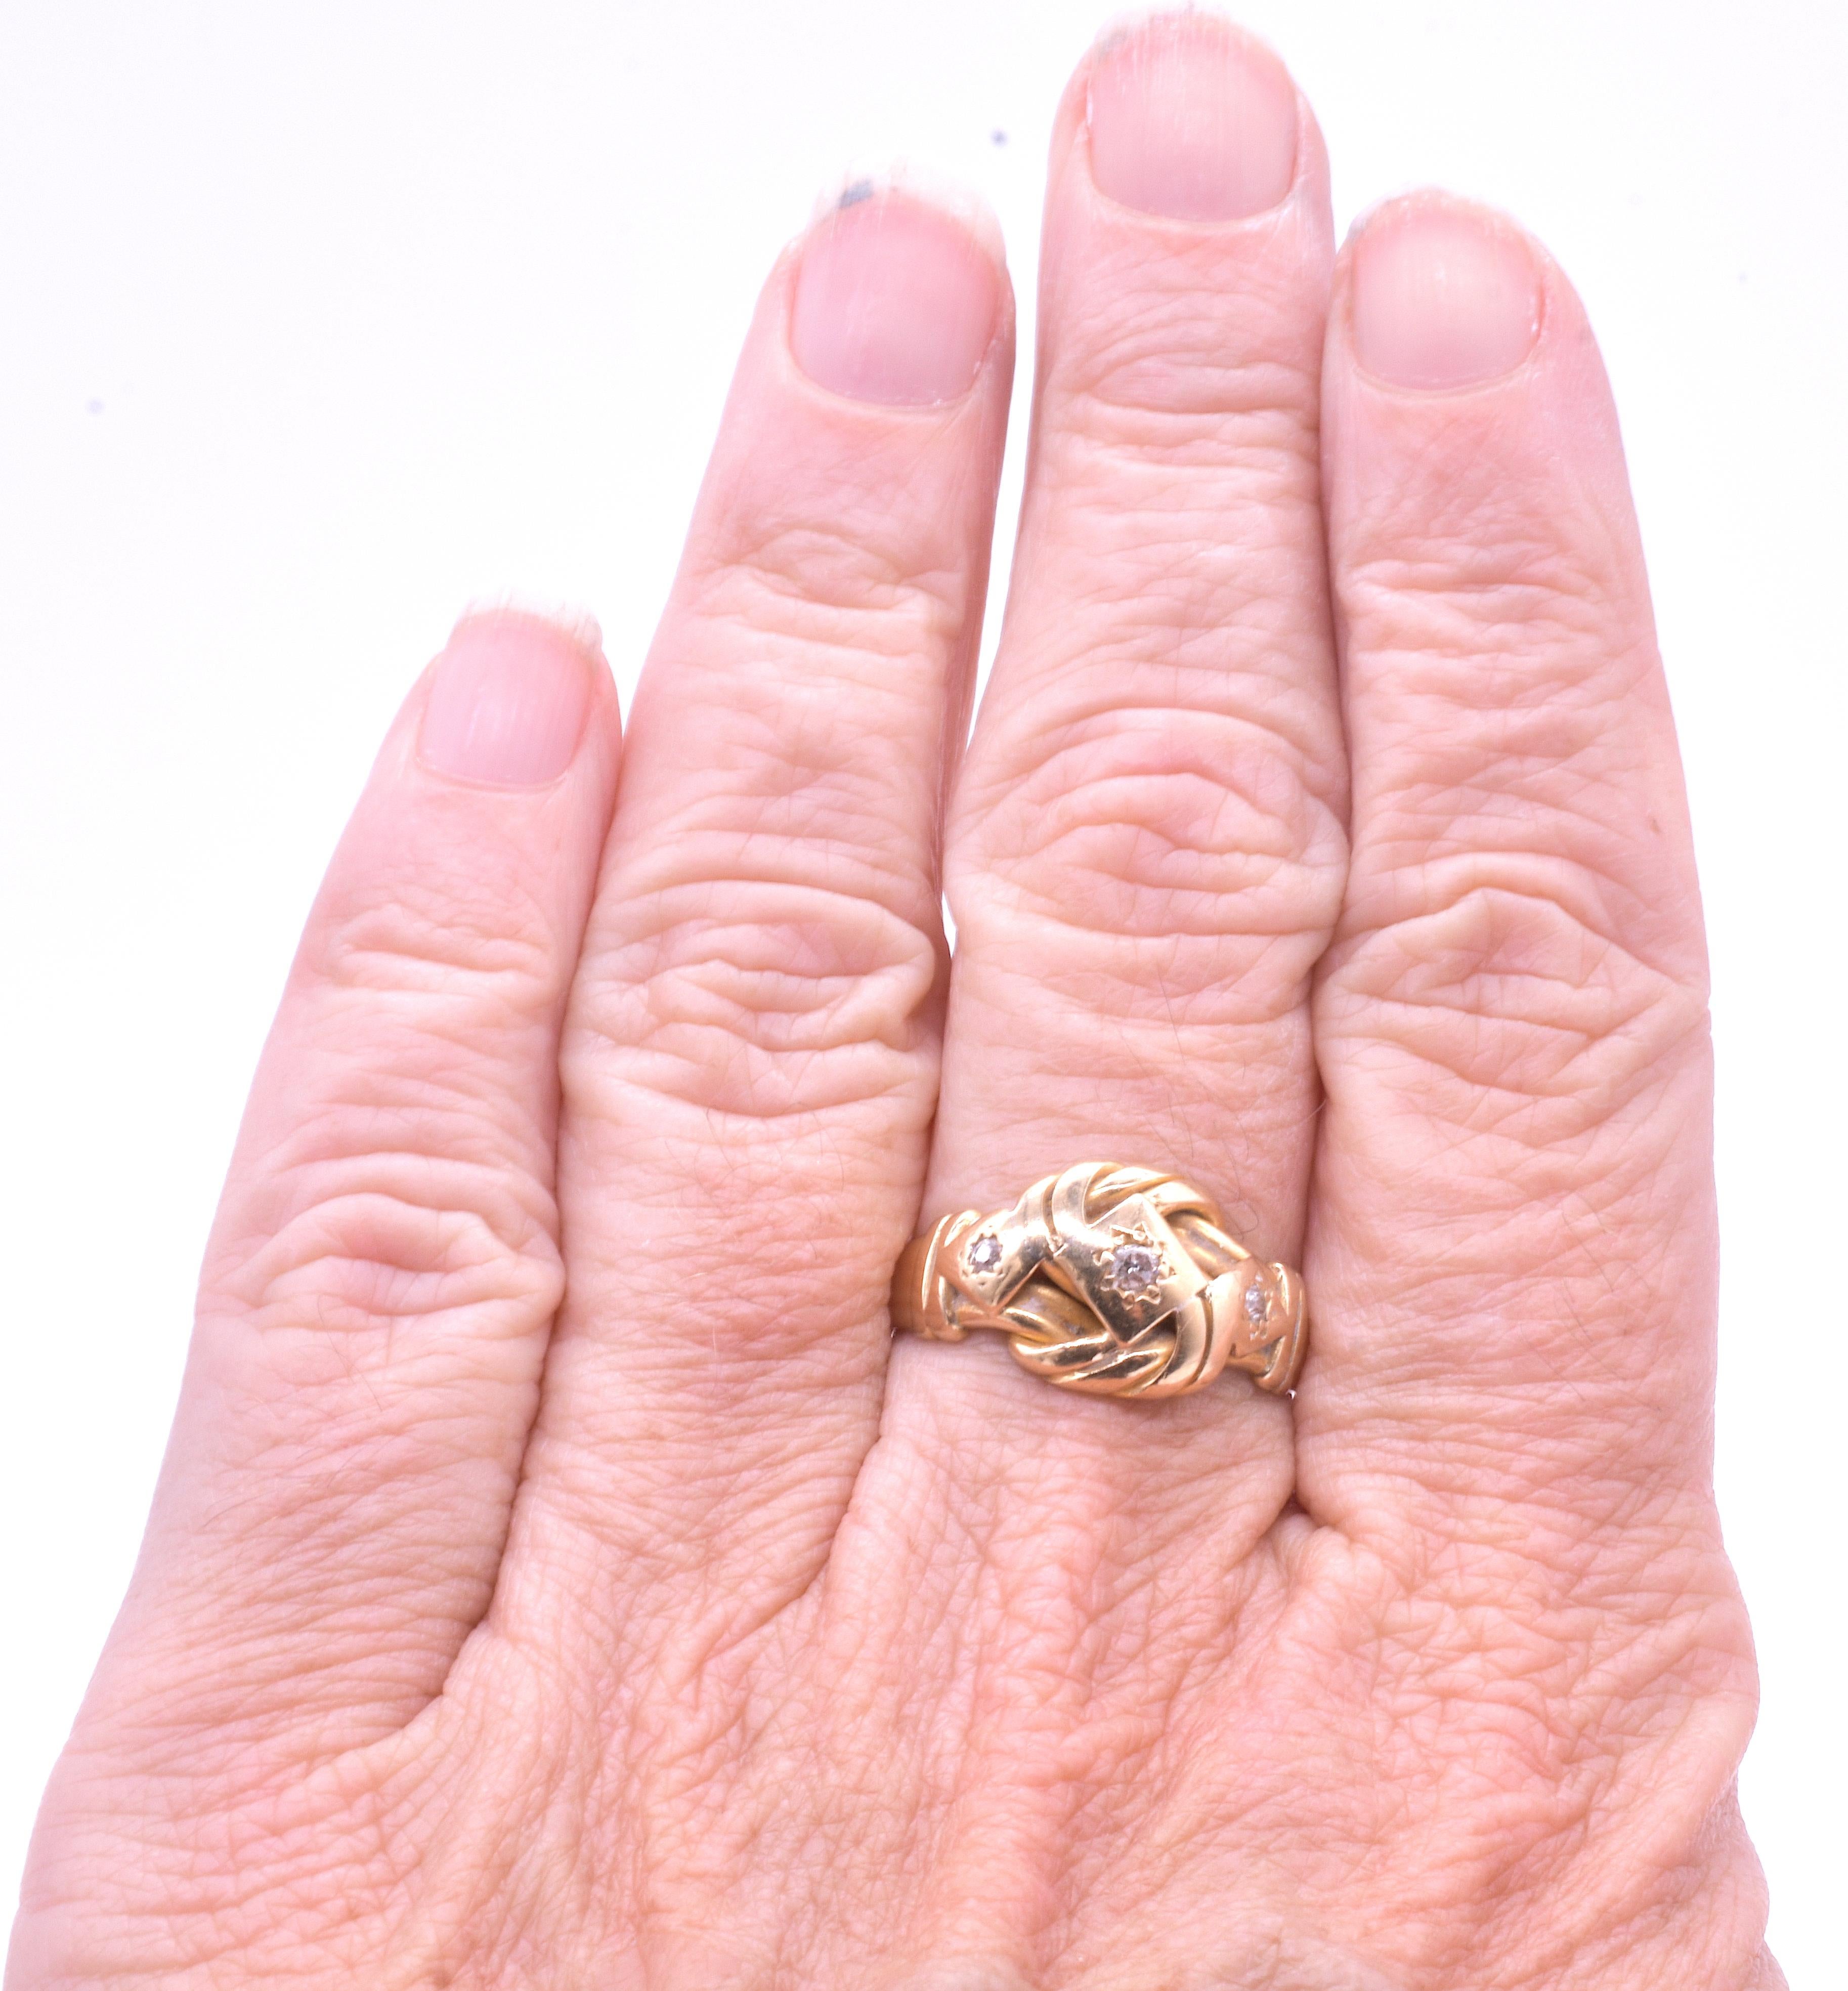 Late Victorian Antique 18 Karat Diamond Lover's Knot Ring, Hallmarked 1905 Birmingham  For Sale